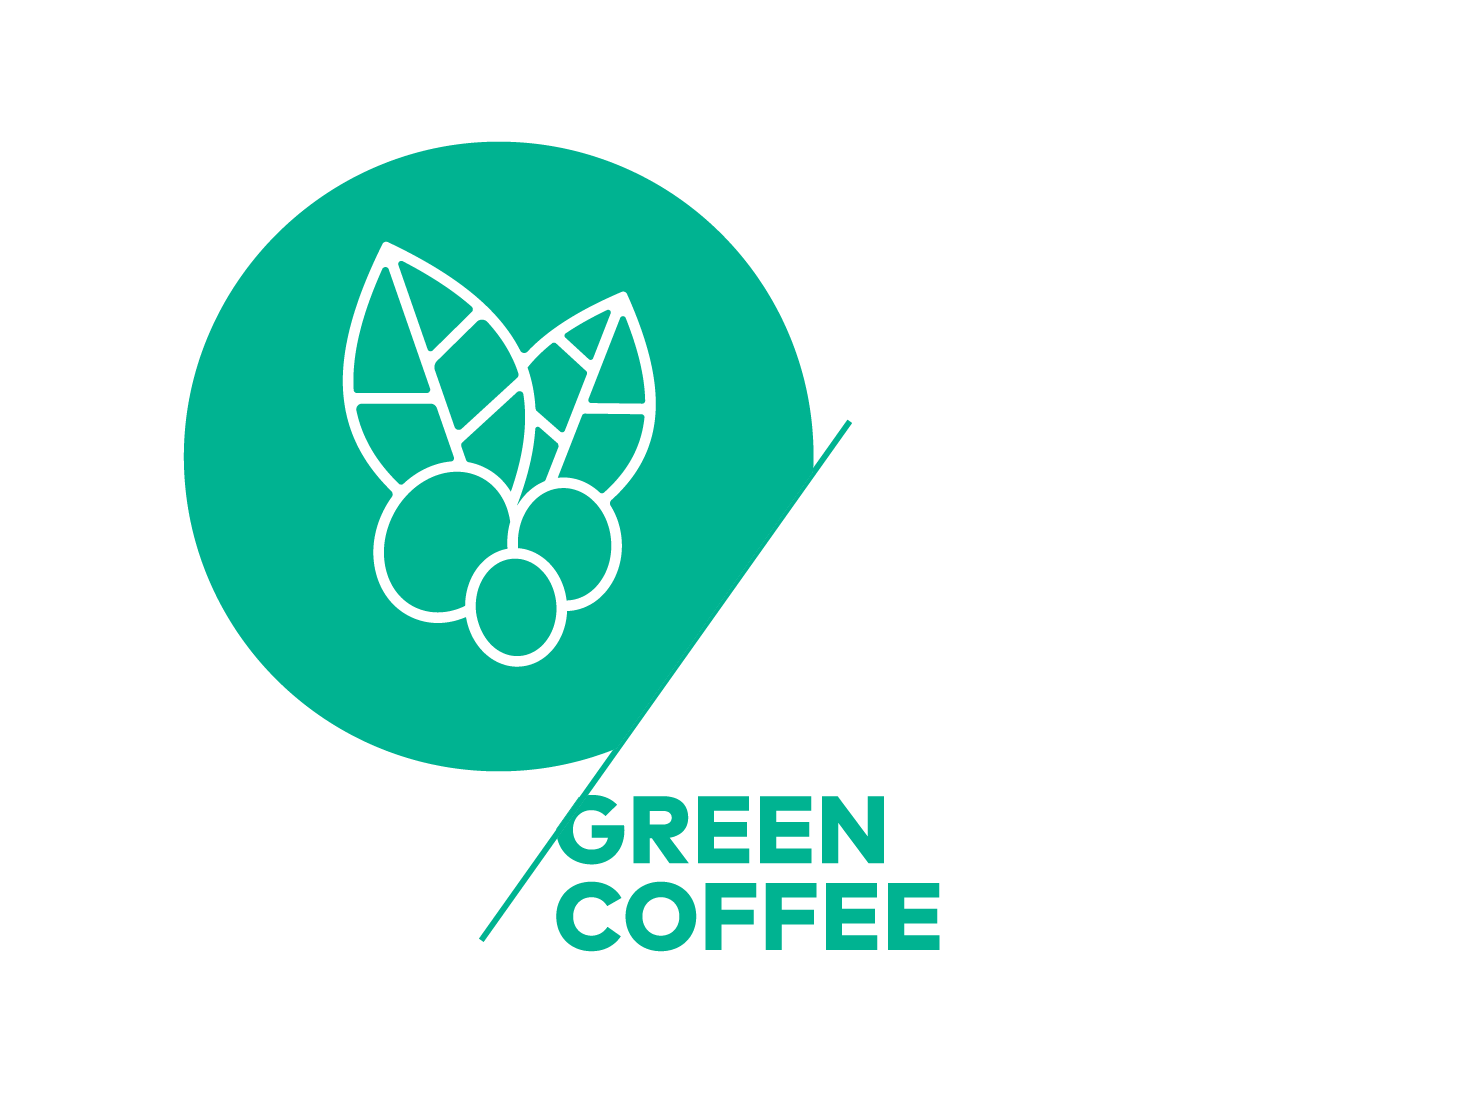 Green coffe